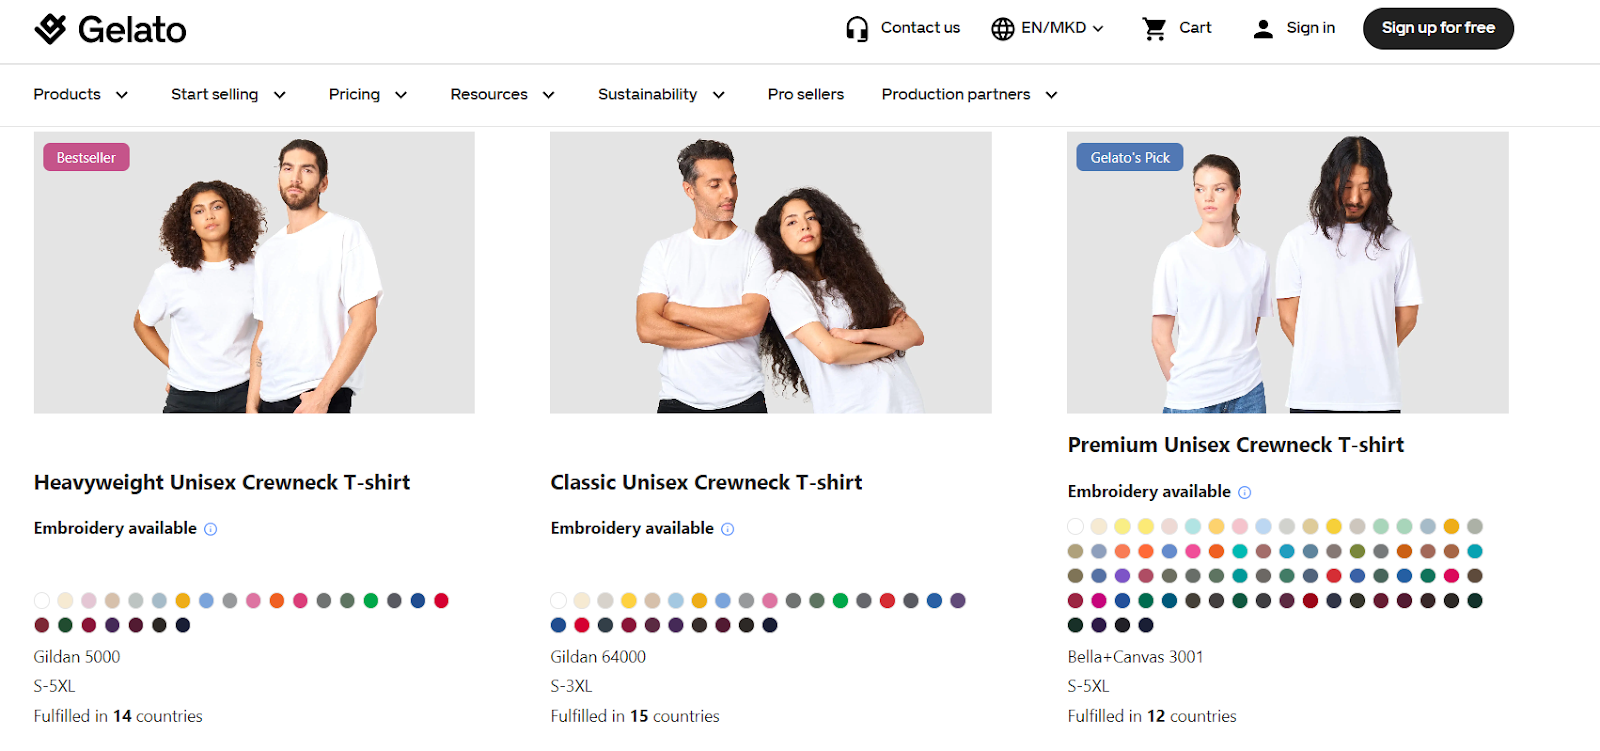 Print on Demand Classic T-Shirt Bella+Canvas 3001 - Print API, Drop shipping